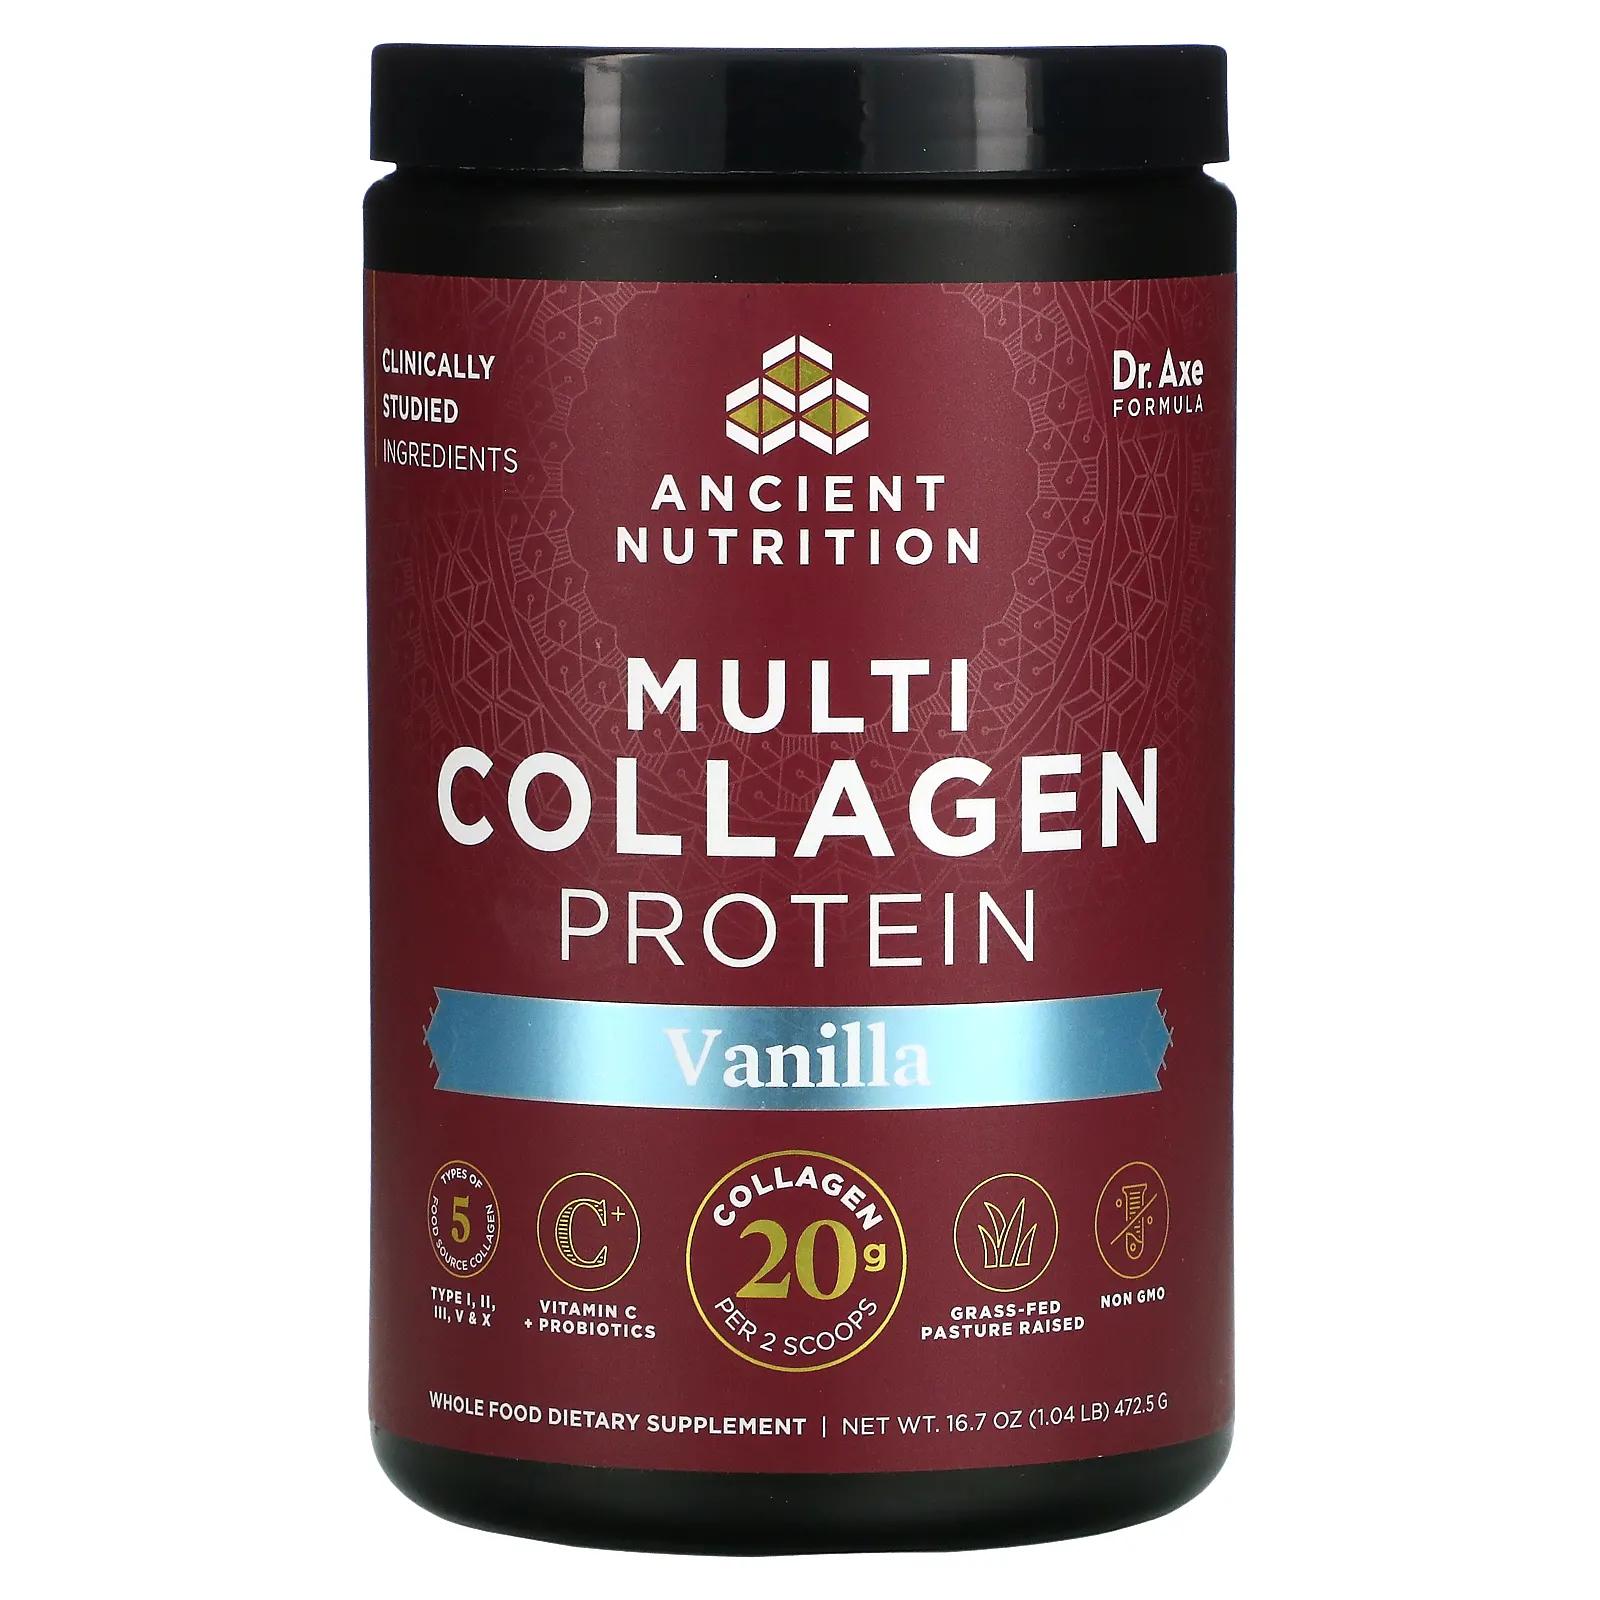 Dr. Axe / Ancient Nutrition Multi Collagen Protein Vanilla 16.8 oz (475 g) dr axe ancient nutrition комплекс коллагенов и протеинов со вкусом ванили 472 5 г 1 04 фунта